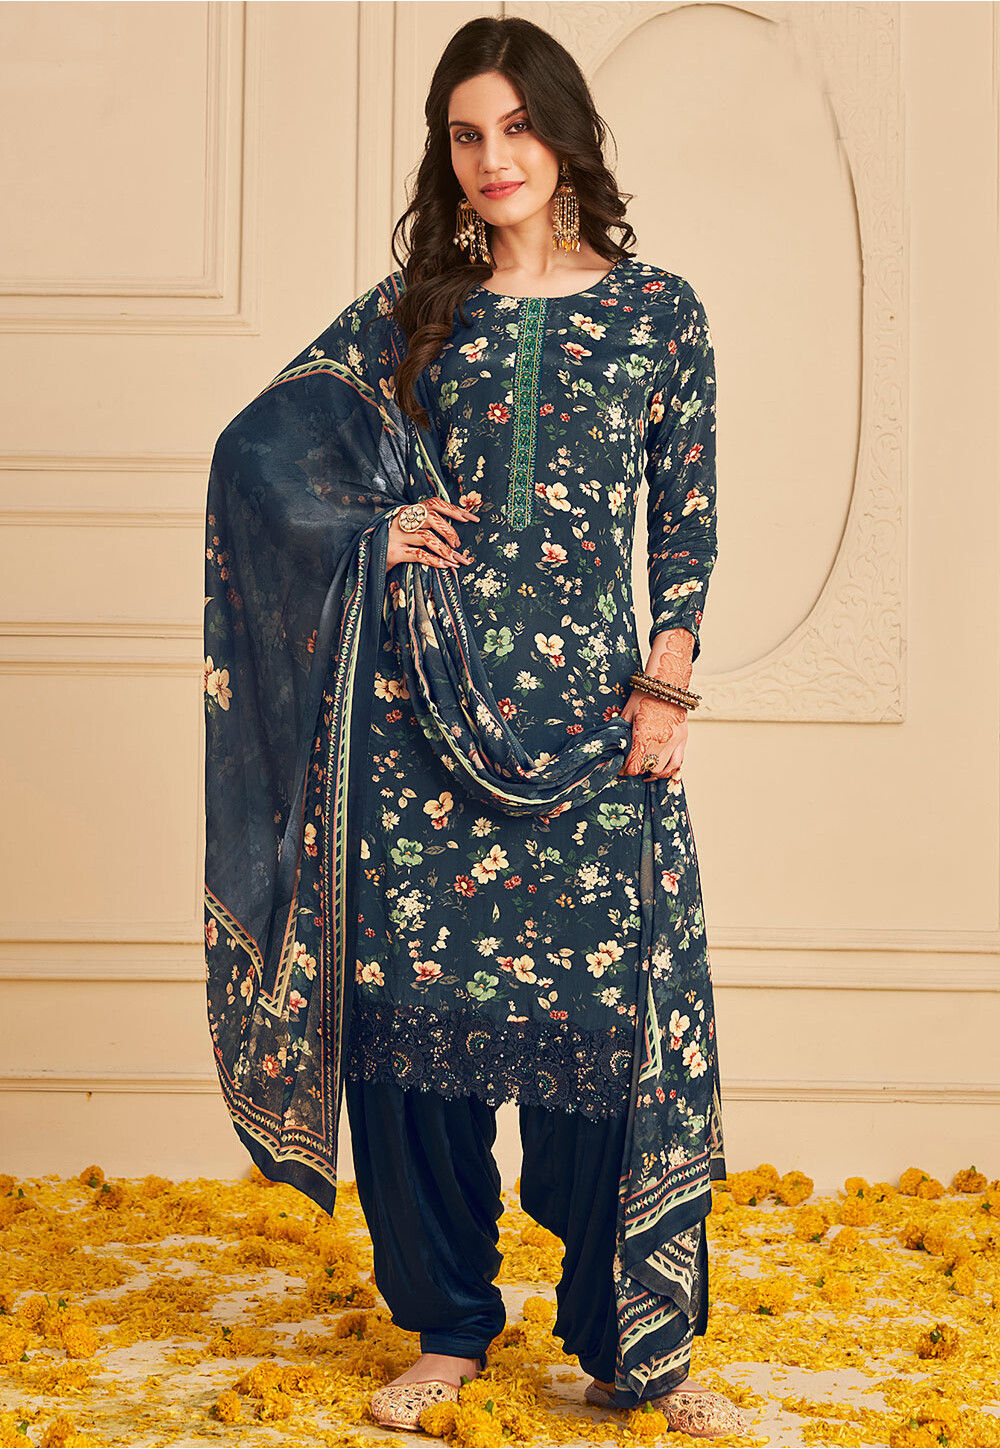 Printed silk punjabi suit.wtsapp pic for details. | Churidhar designs,  Designer punjabi suits, Patiala dress